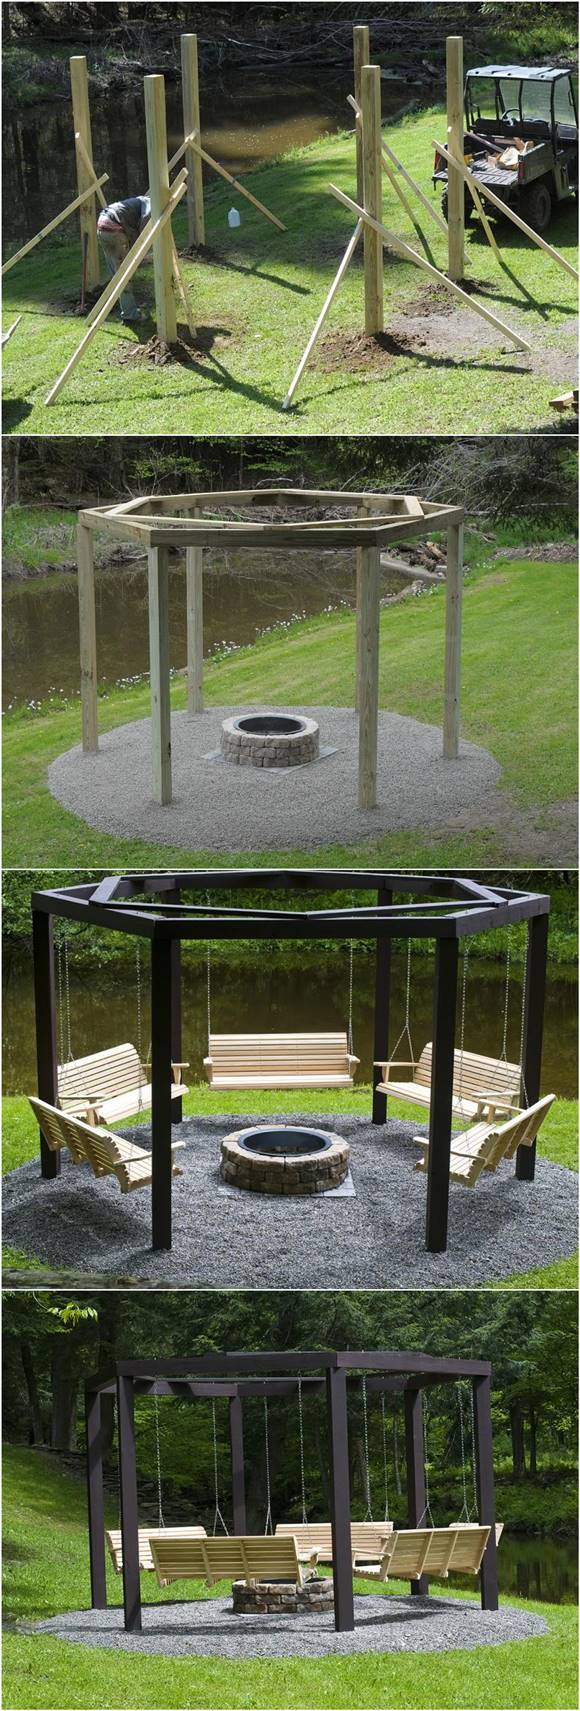 DIY Backyard Fire Pit with Swing Seats